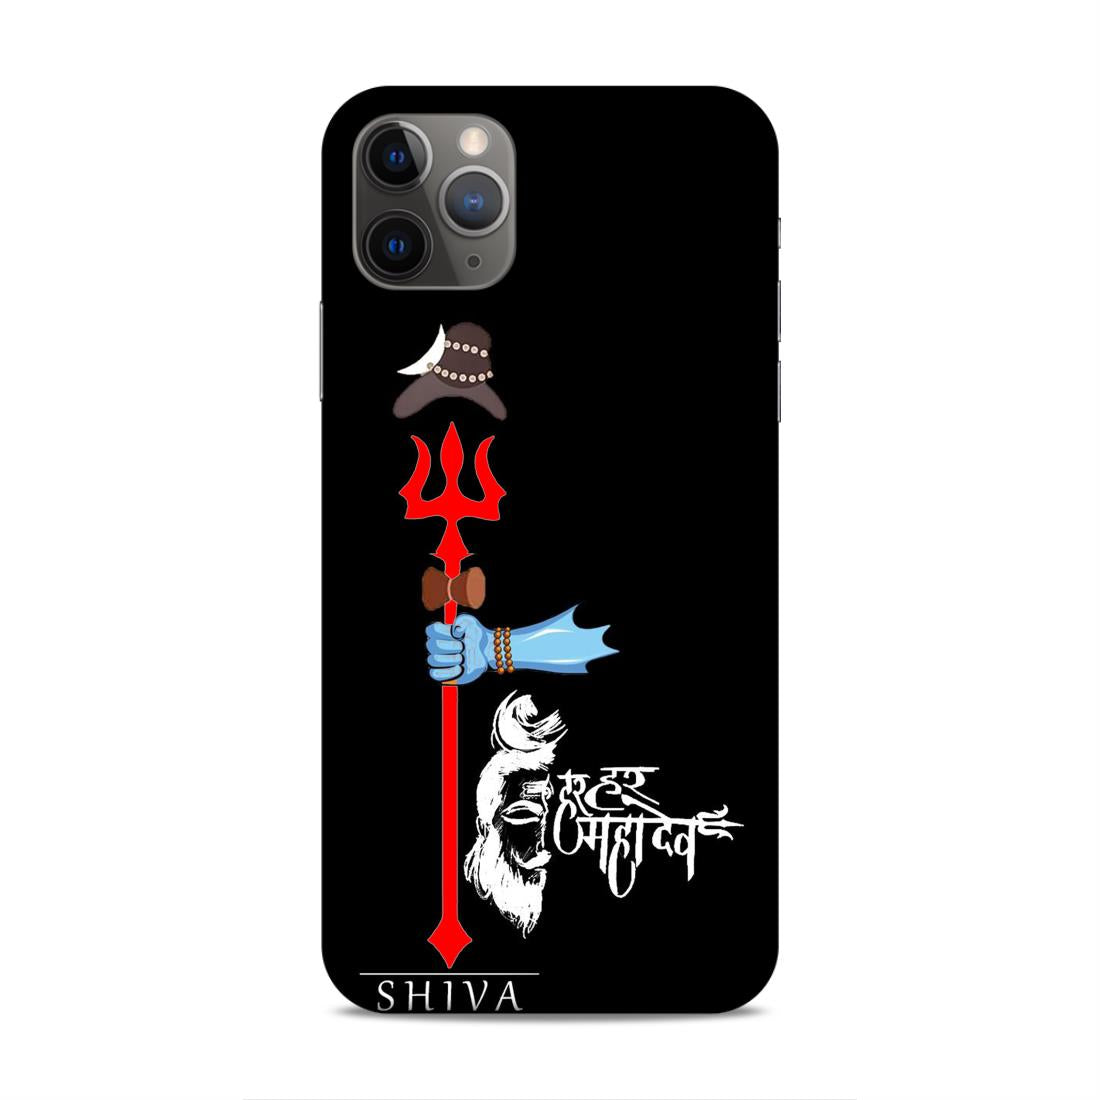 Shiva Hard Back Case For Apple iPhone 11 Pro Max